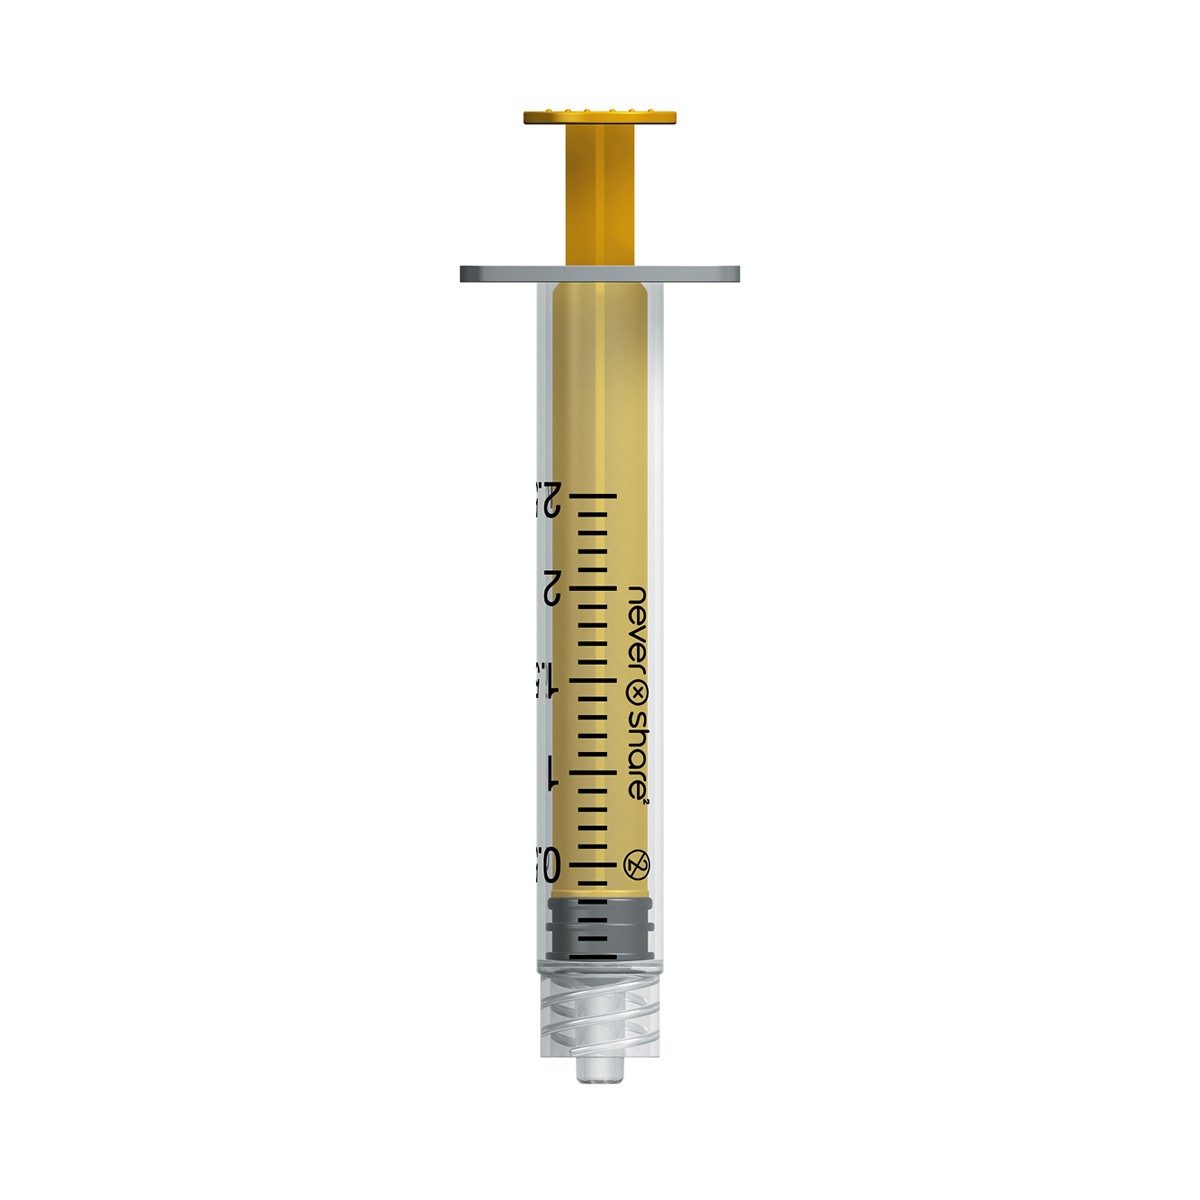 buy 2.5ml luer lock syringe steroids